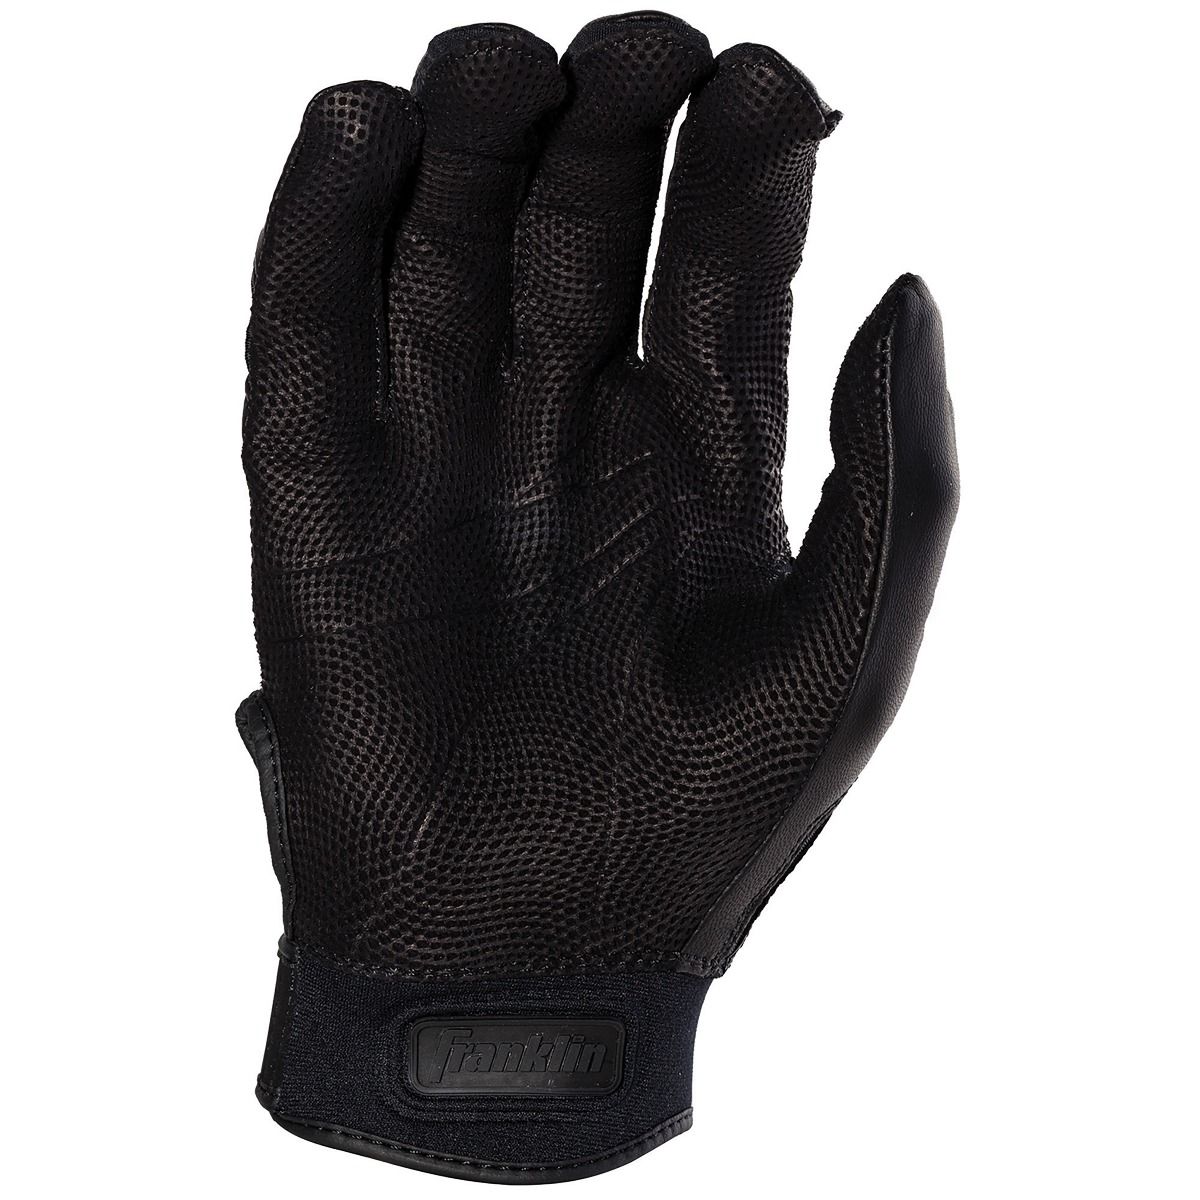 Franklin CFX Pro Chrome Batting Gloves - Adult - Black